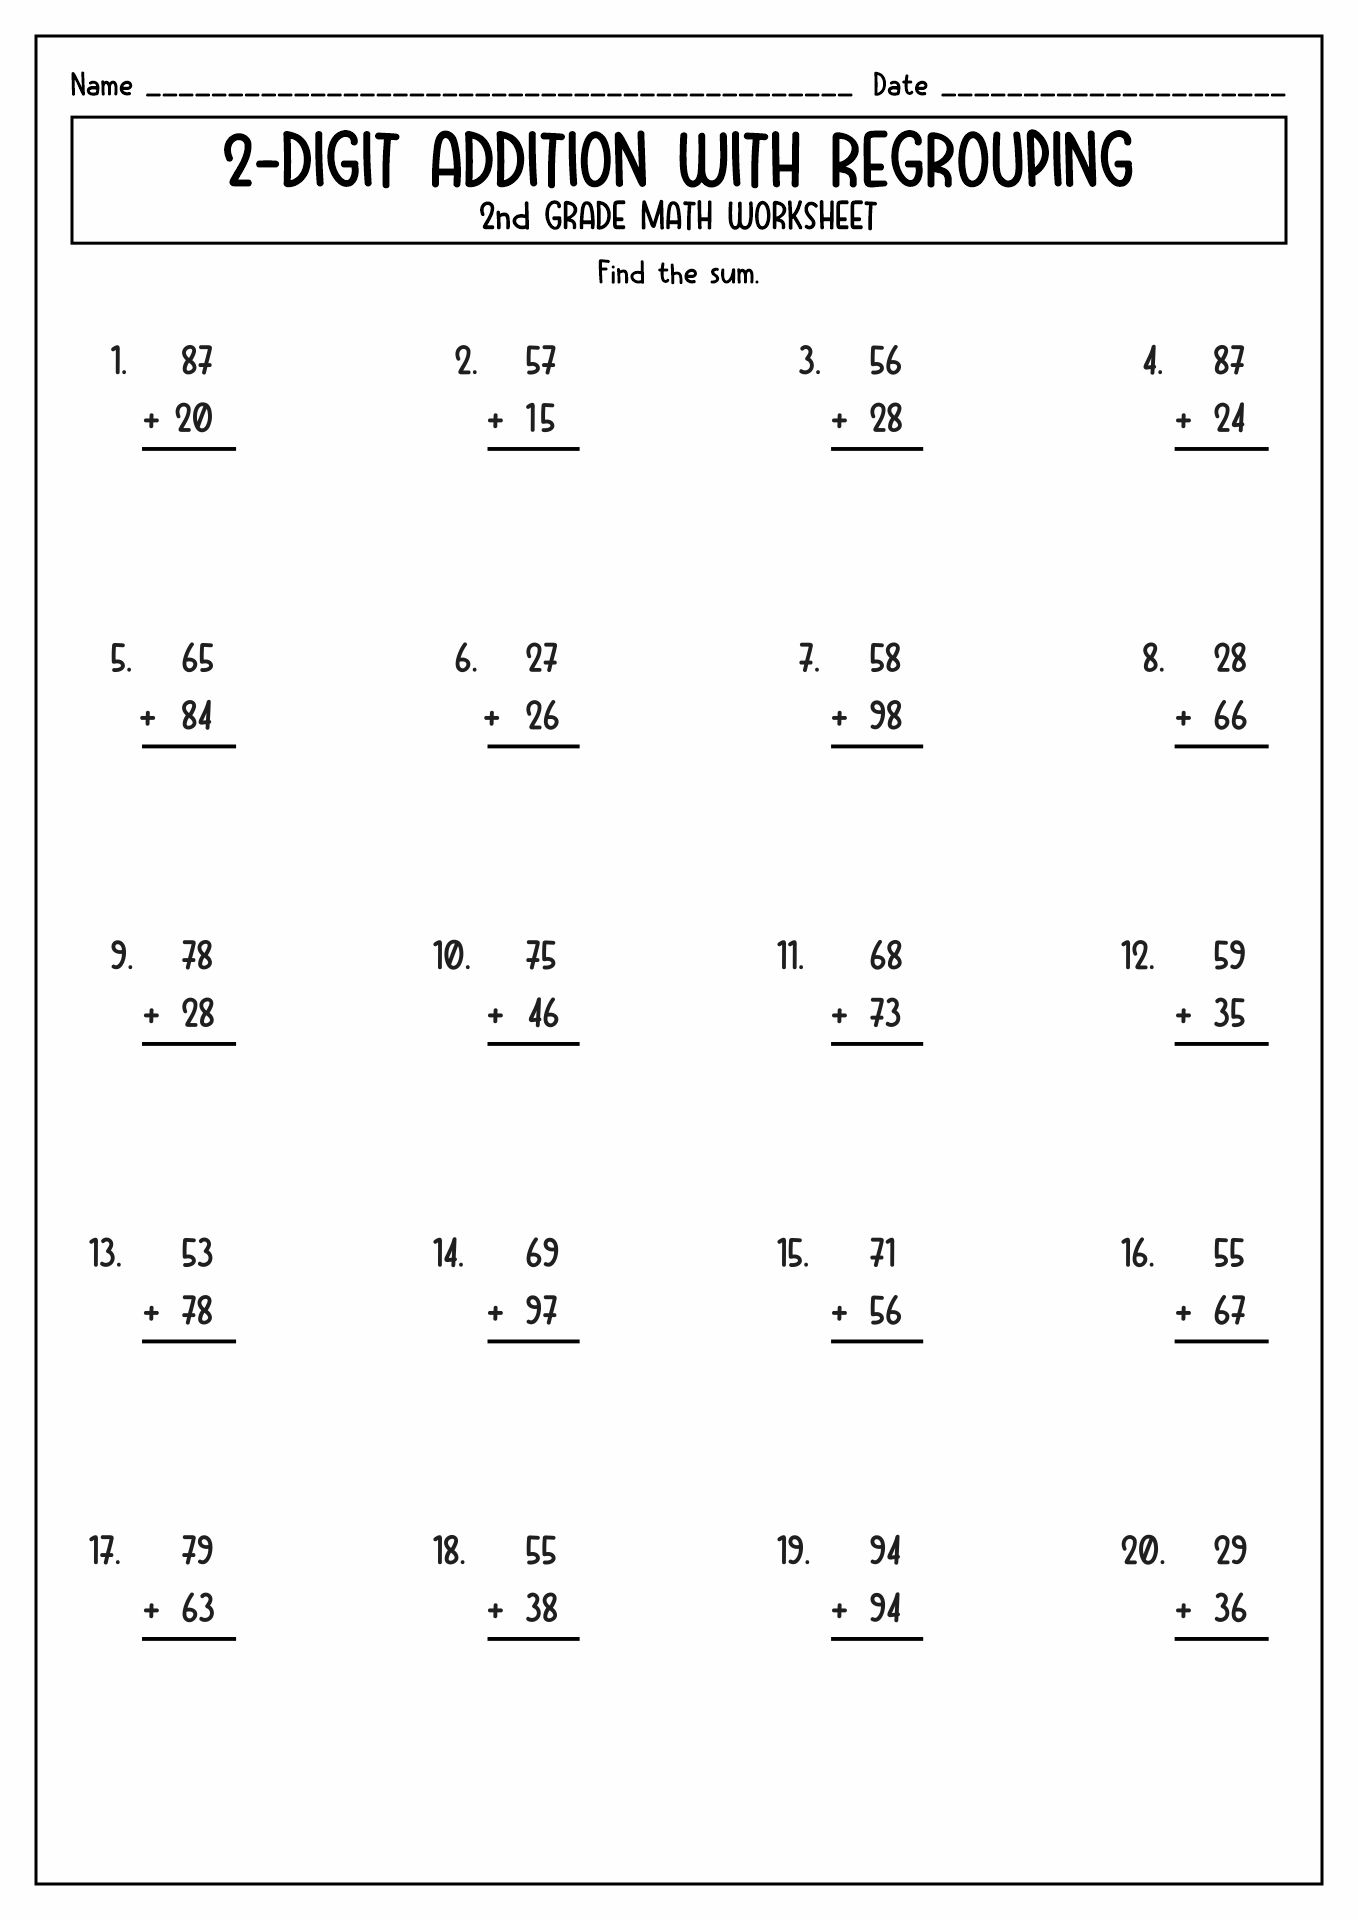 Math Second Worksheet 2nd Grade Image